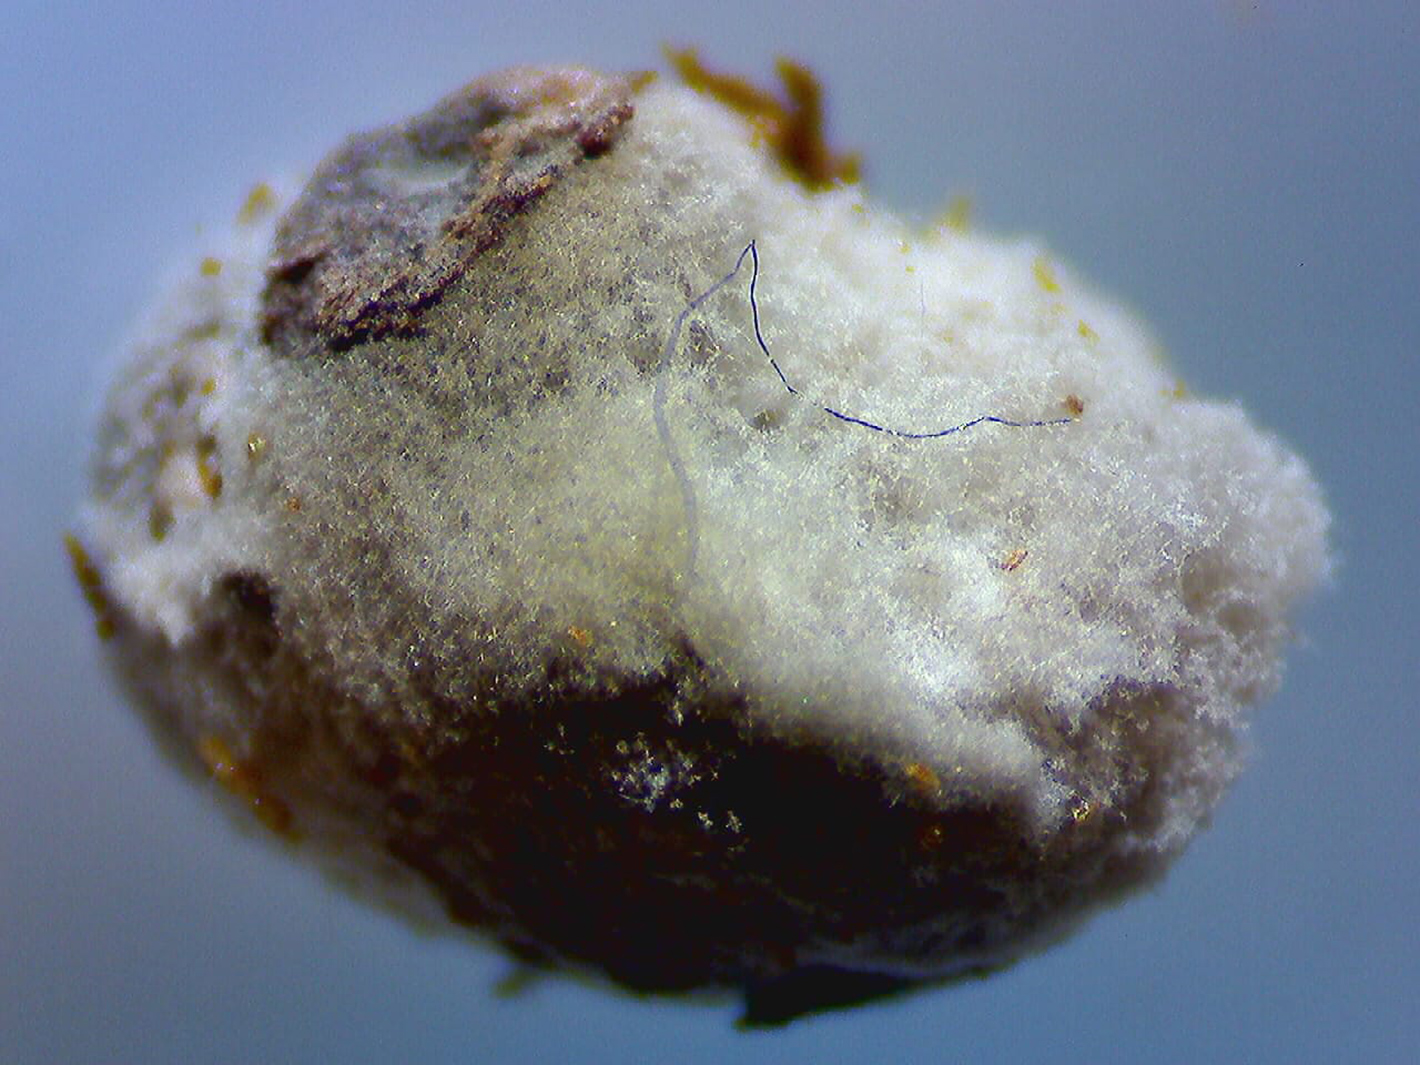 the inside of an oak apple (through a microscope)